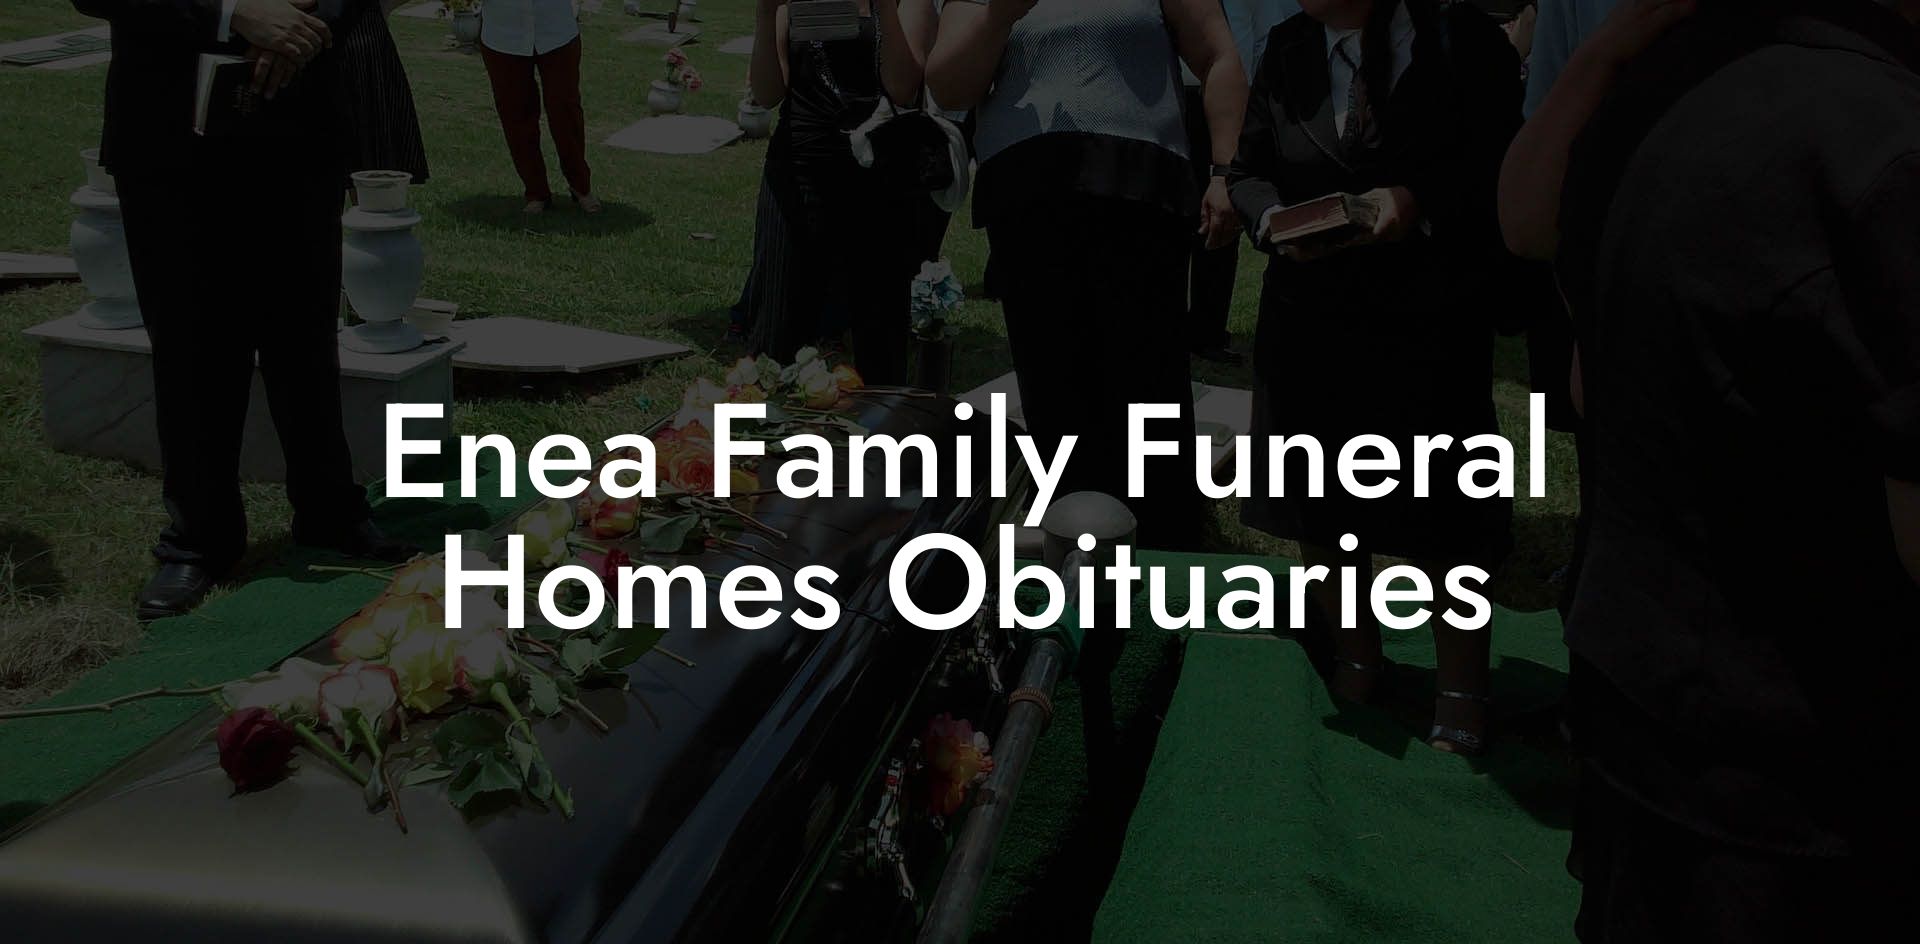 Enea Family Funeral Homes Obituaries